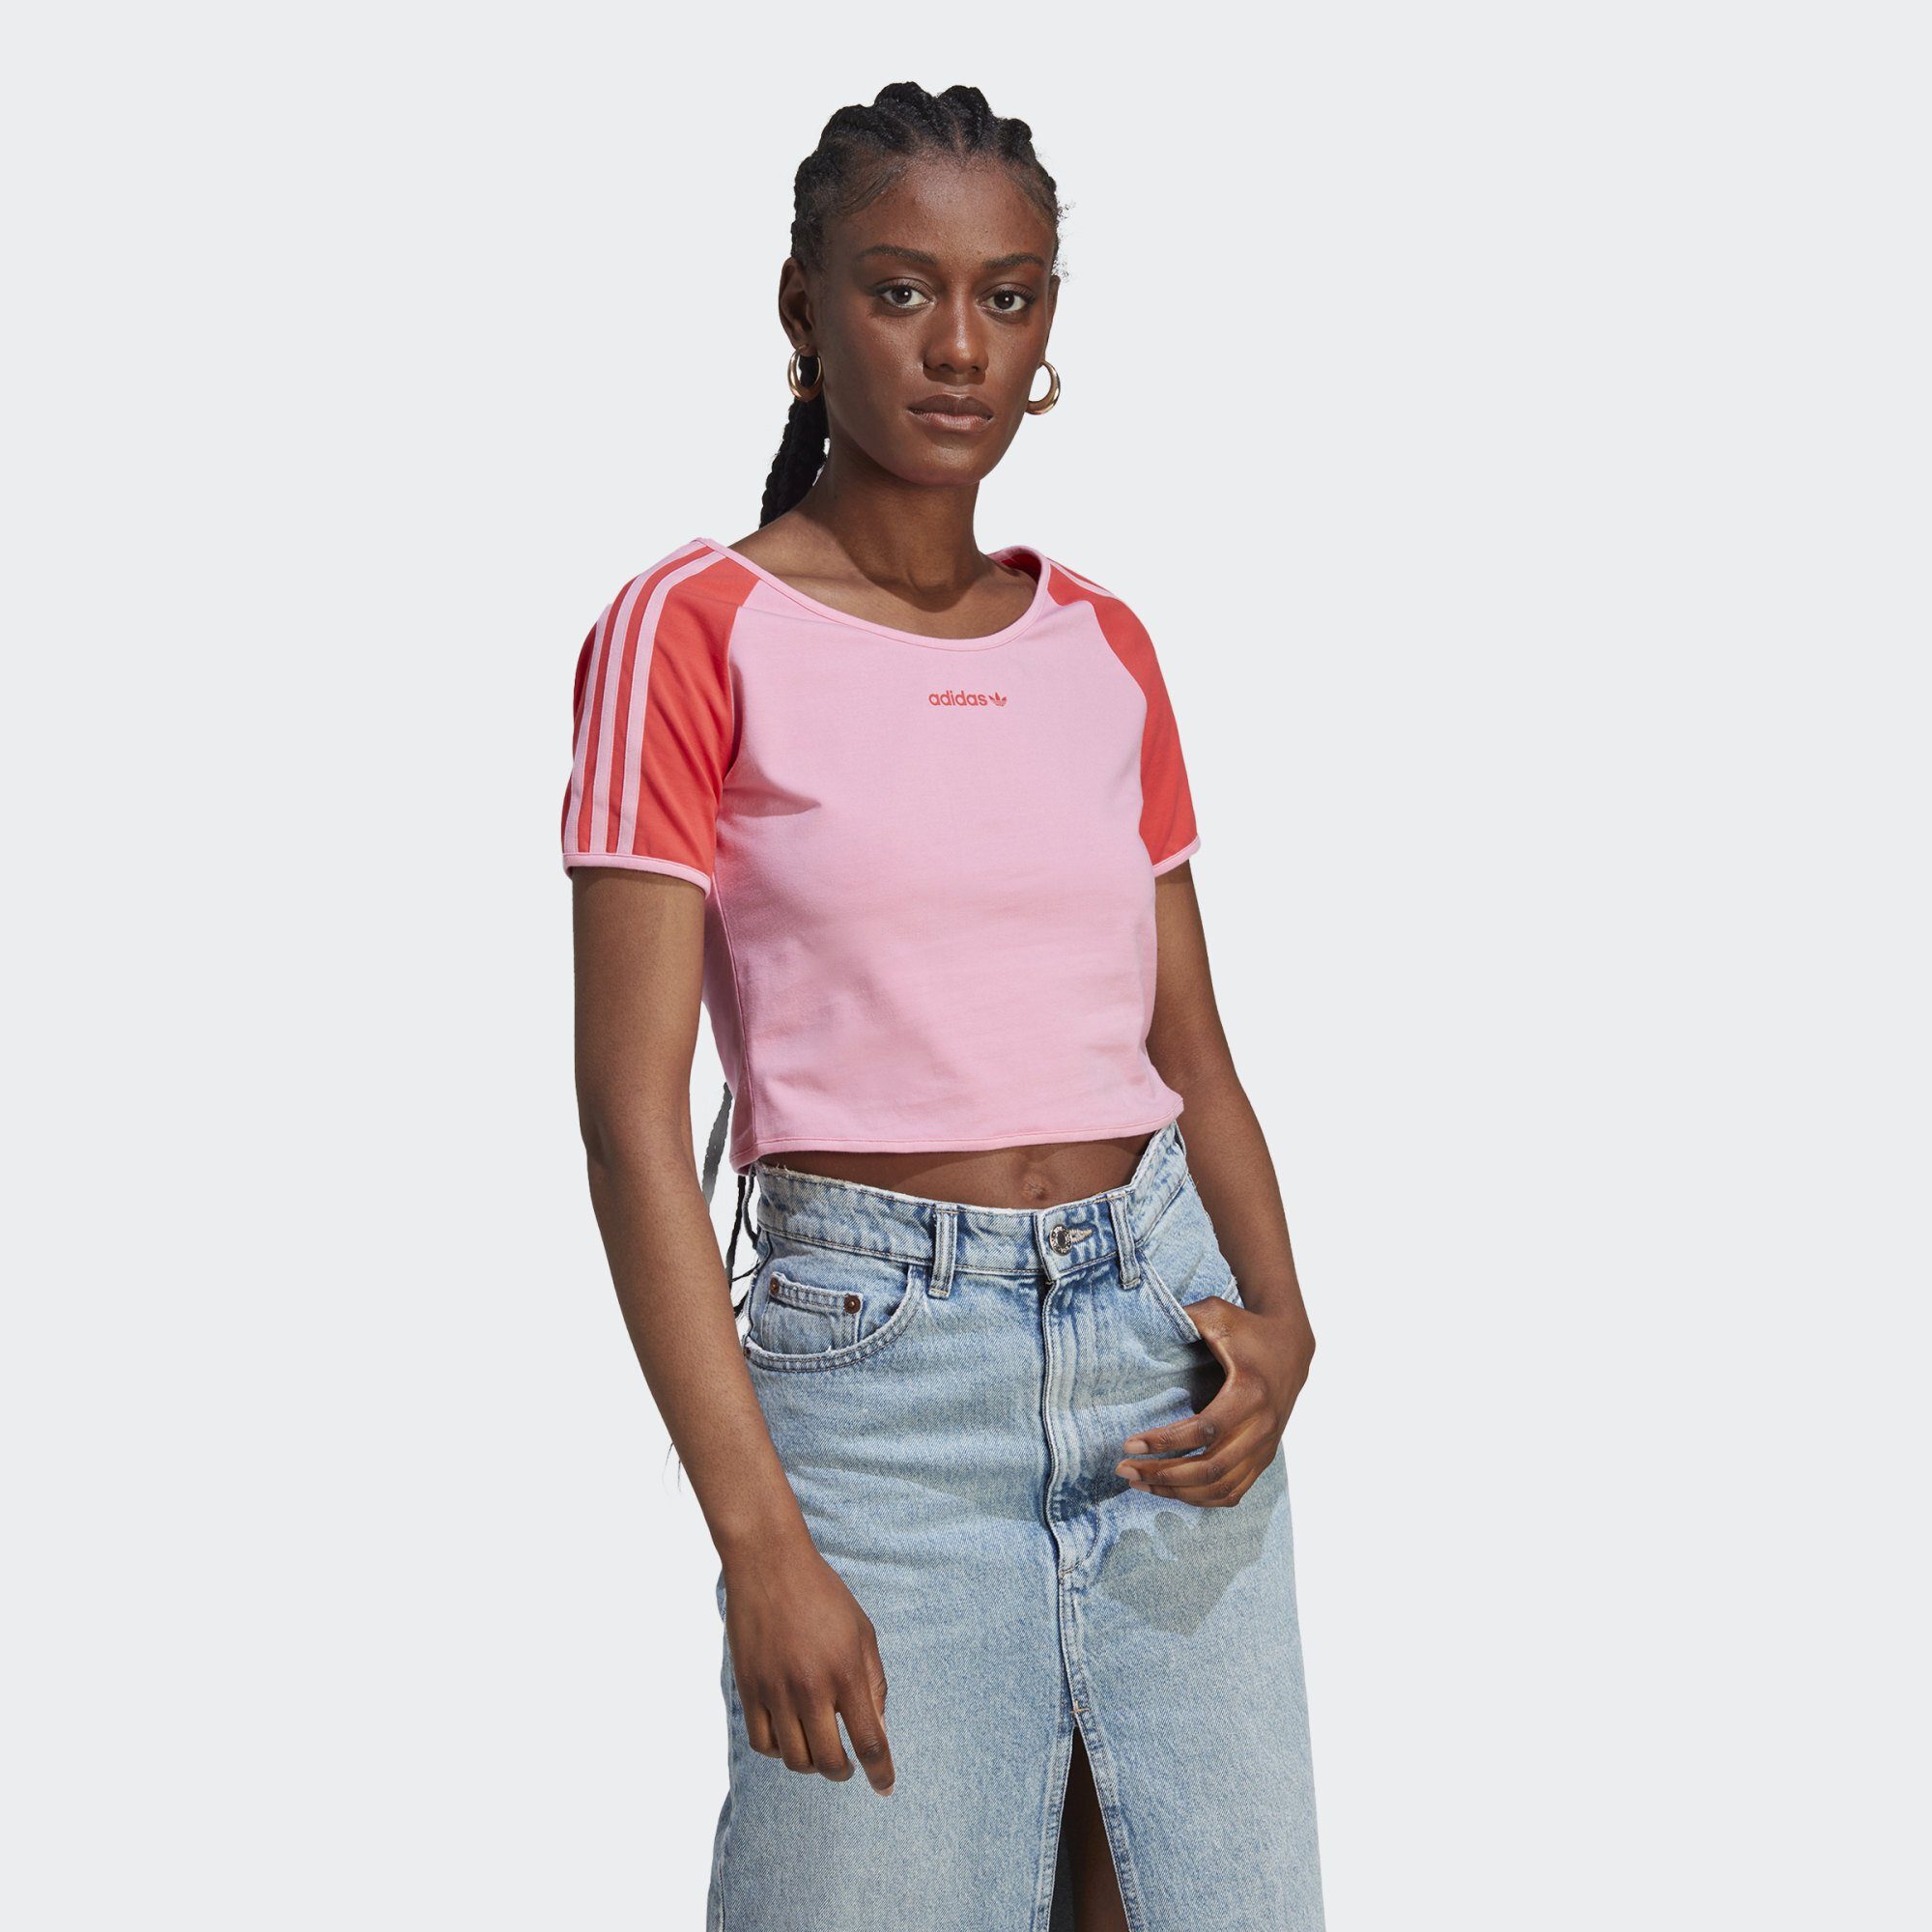 T-Shirt Originals Real adidas Semi CLUB T-SHIRT Glow / ISLAND Coral Pink SHORT